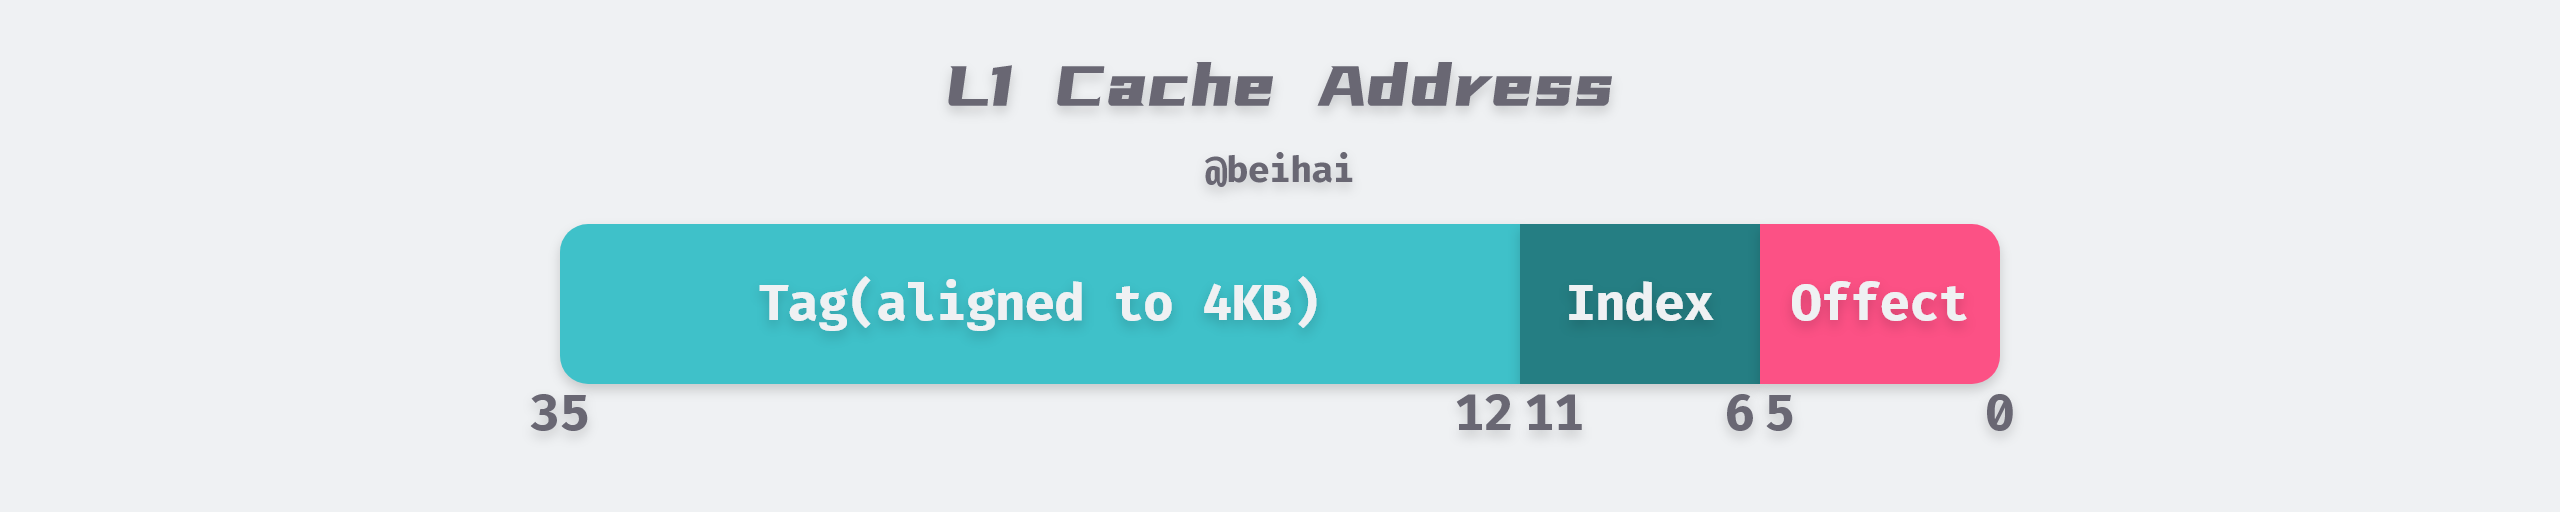 l1 cache address